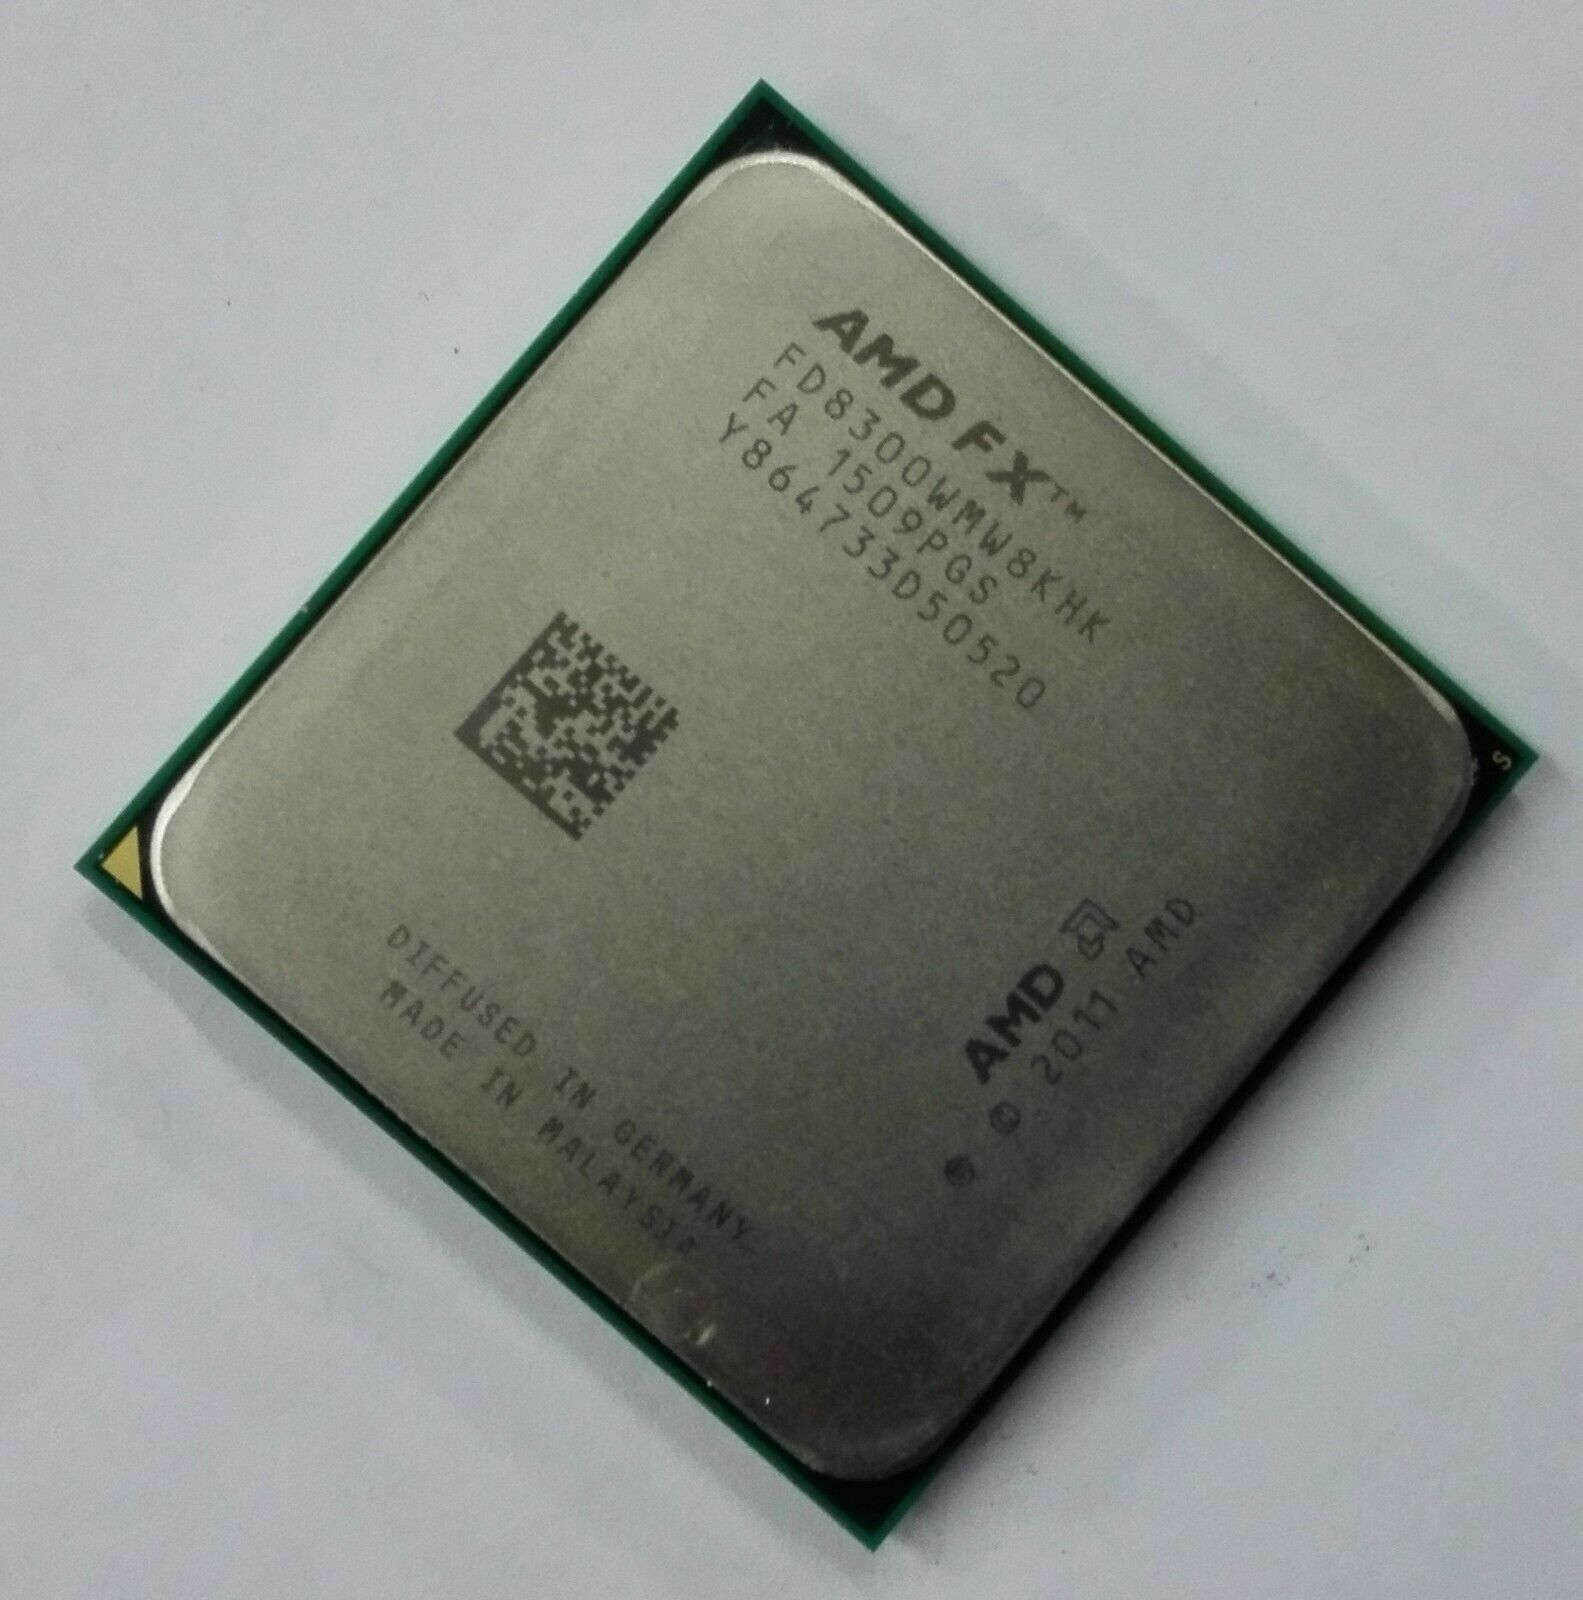 AMD FX8300 Desktop Processor AM3+ FD8300WMW8KHK 95W Work normally 8 cores